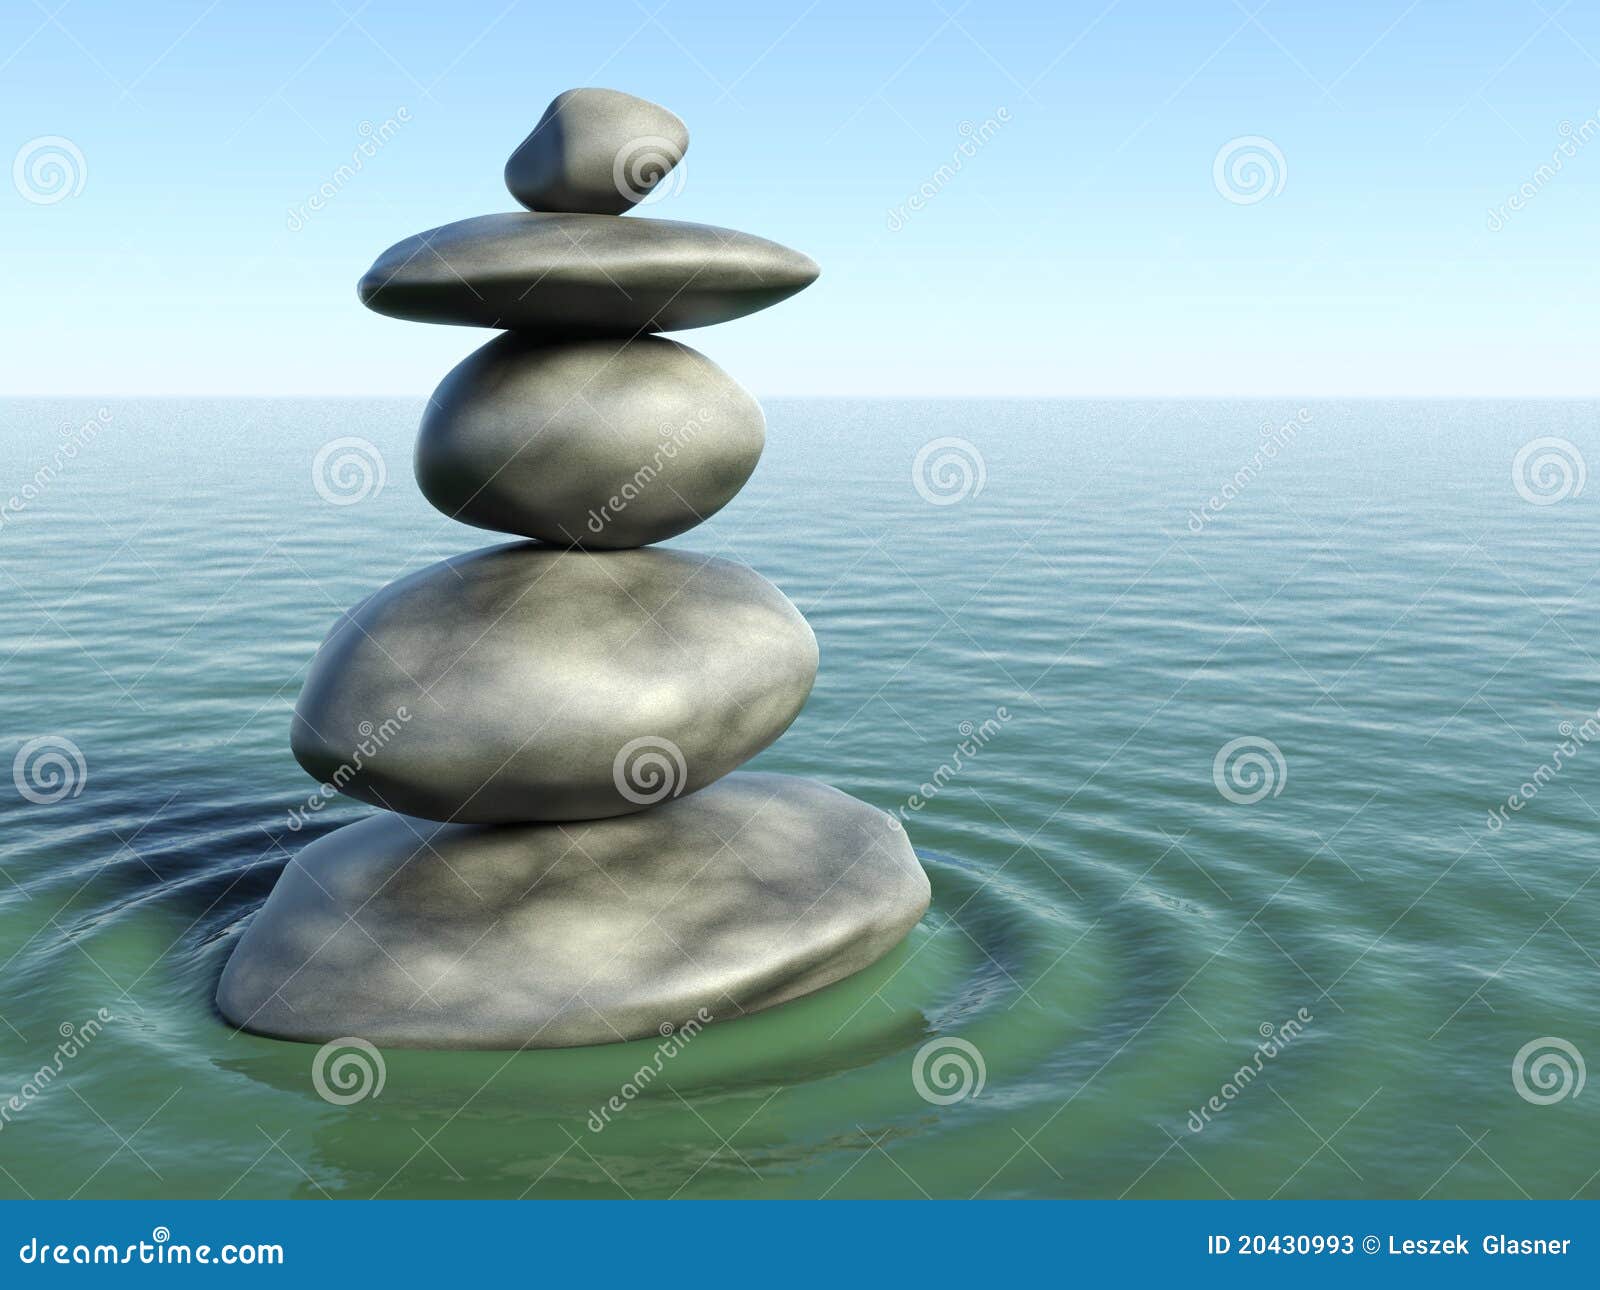 3D rendering of balancing Zen stones in water with blue sky and